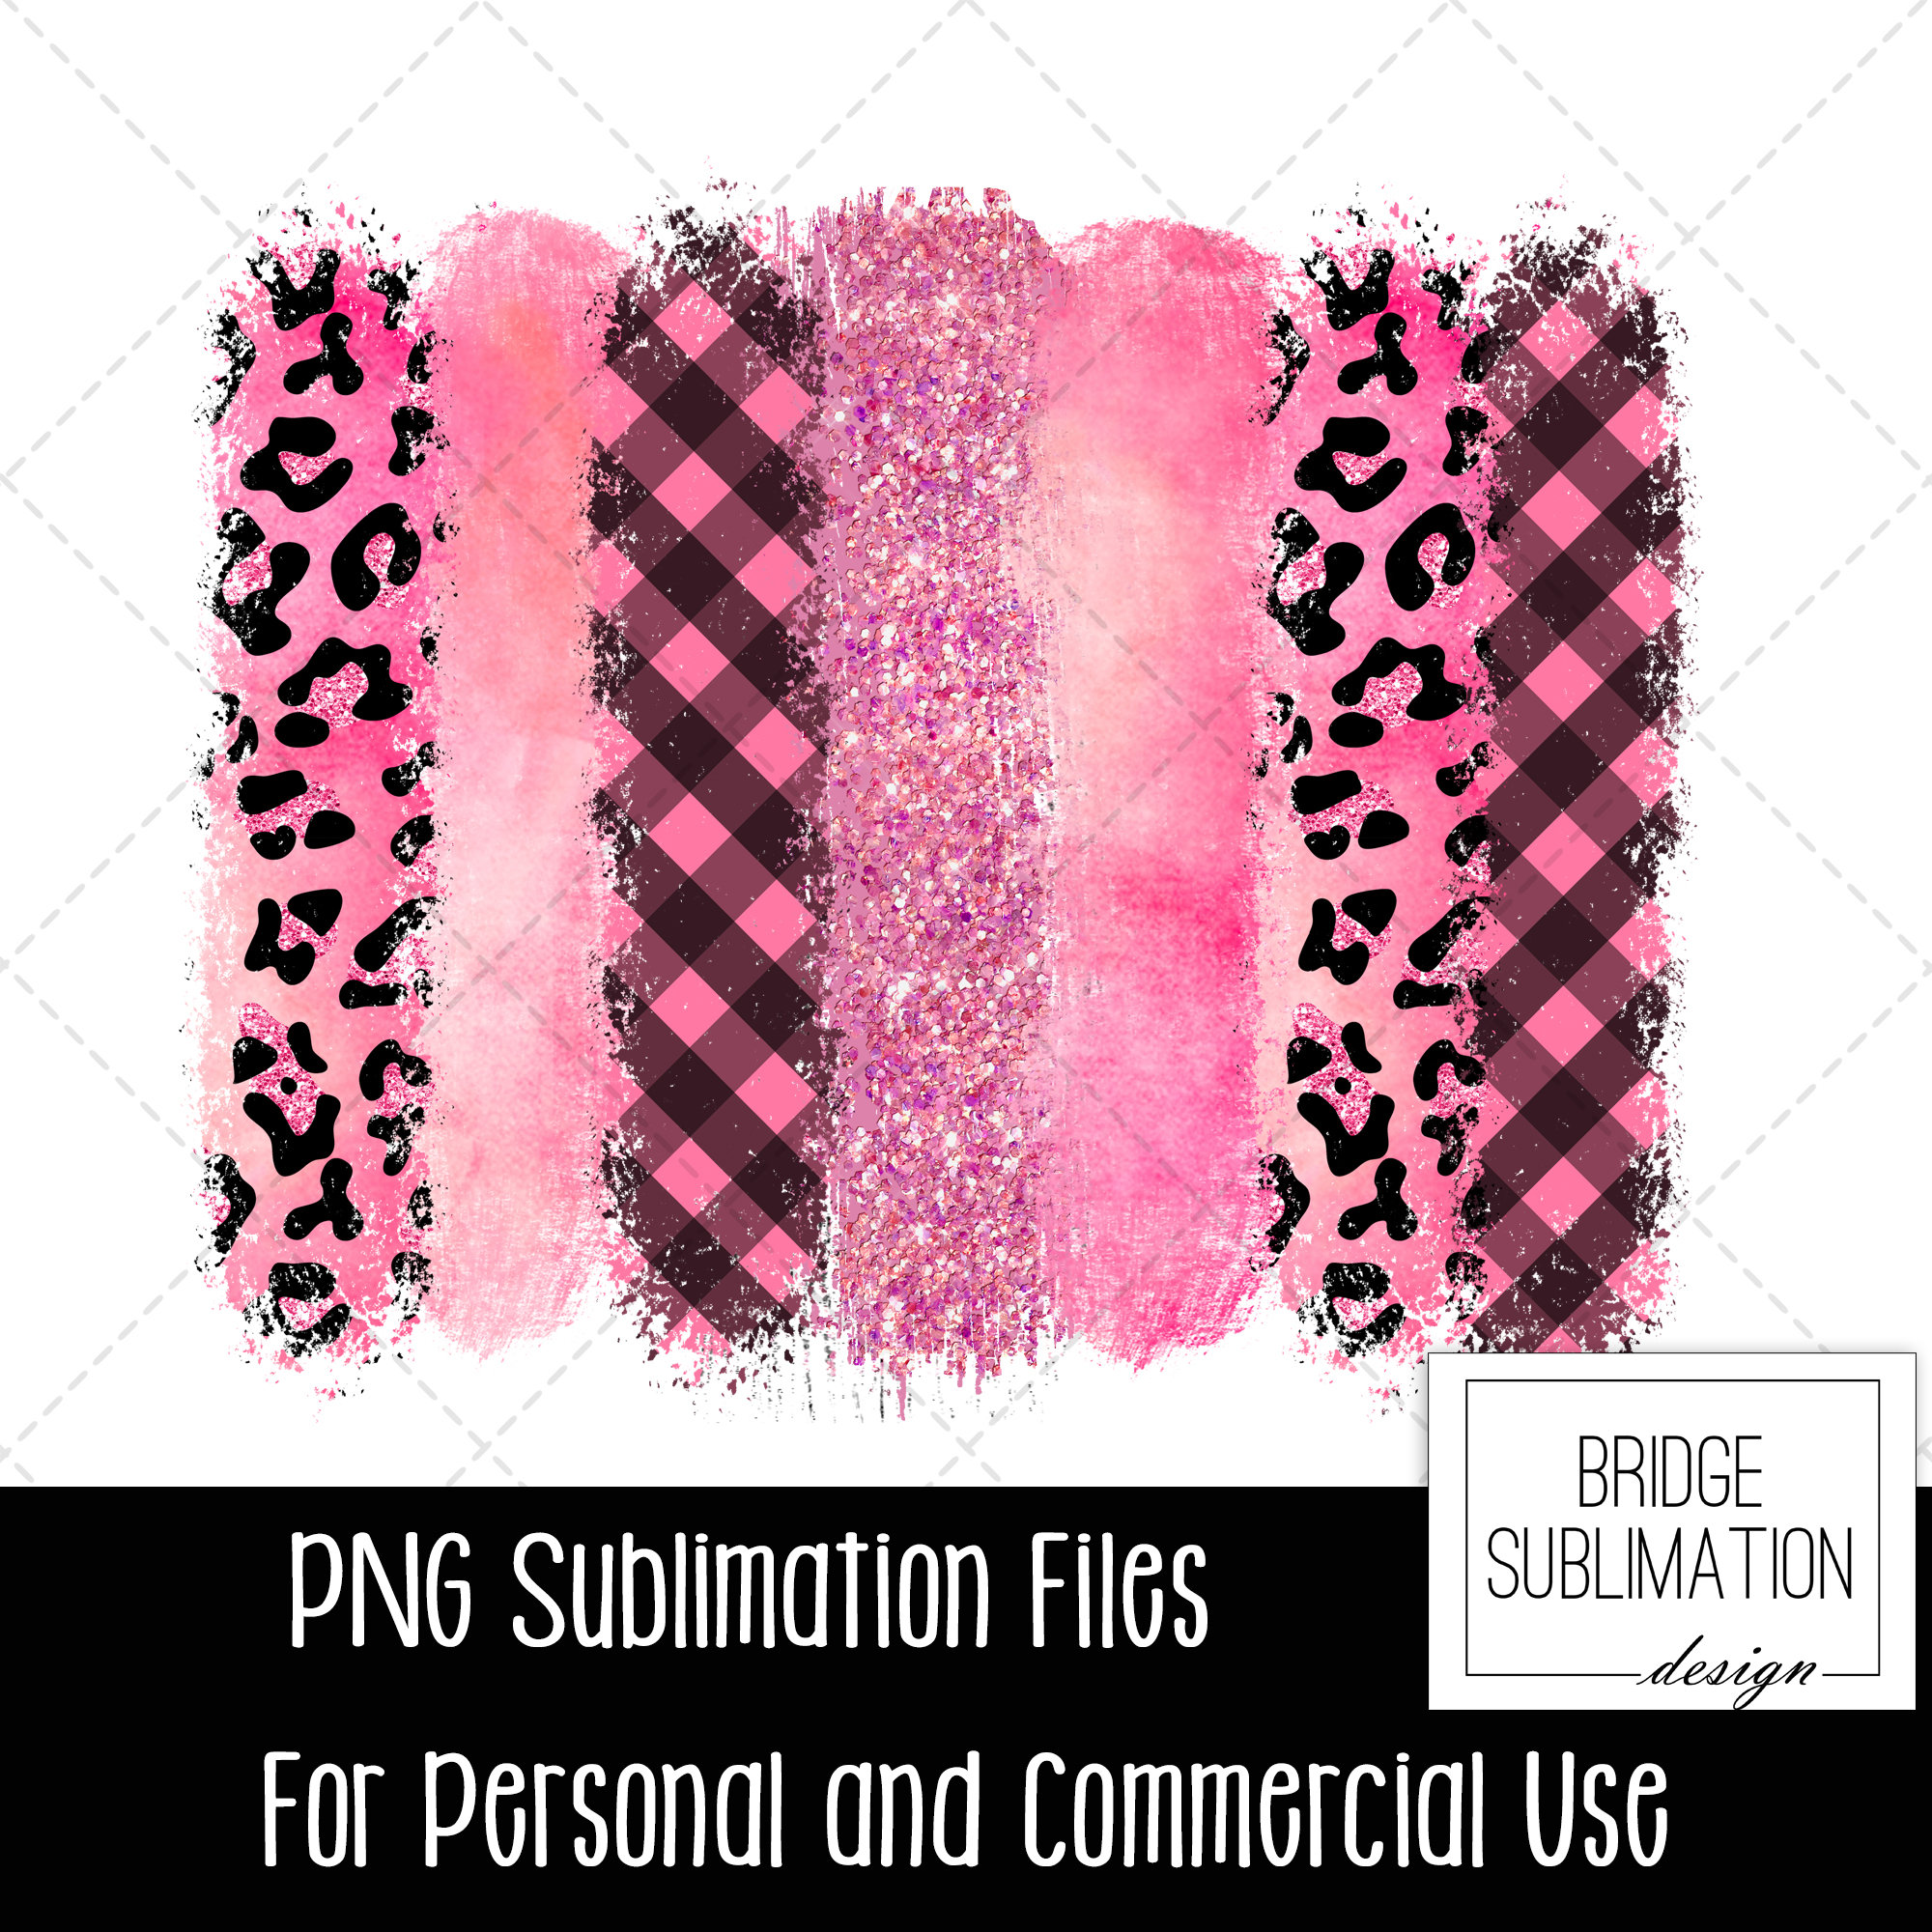 Light Leopard Wallpaper in Pink – Lo Home